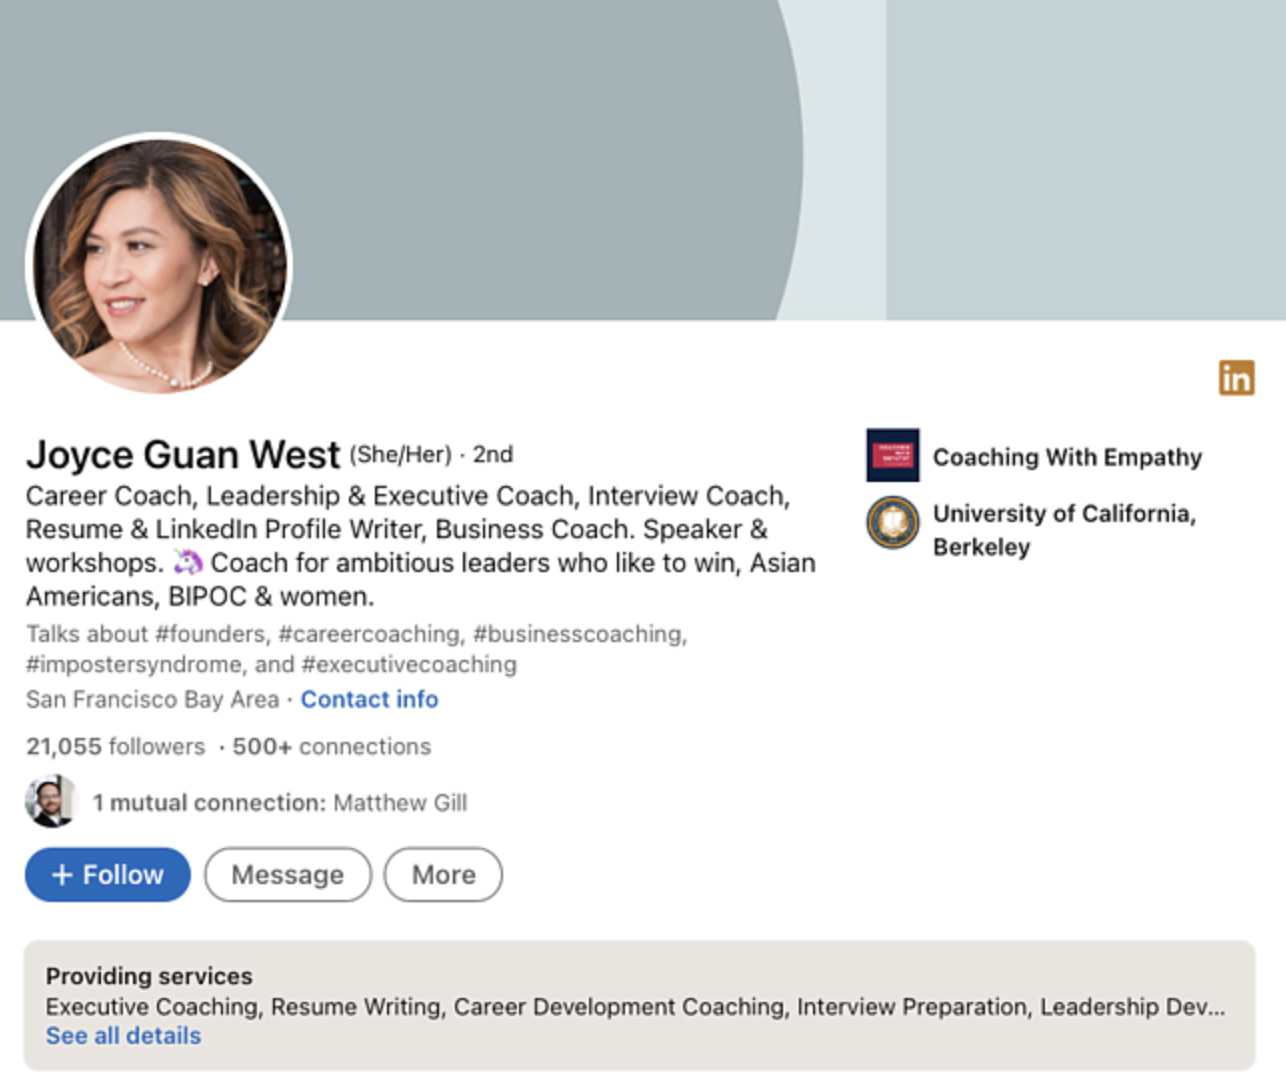 LinkedIn summary example: Joyce Guan West